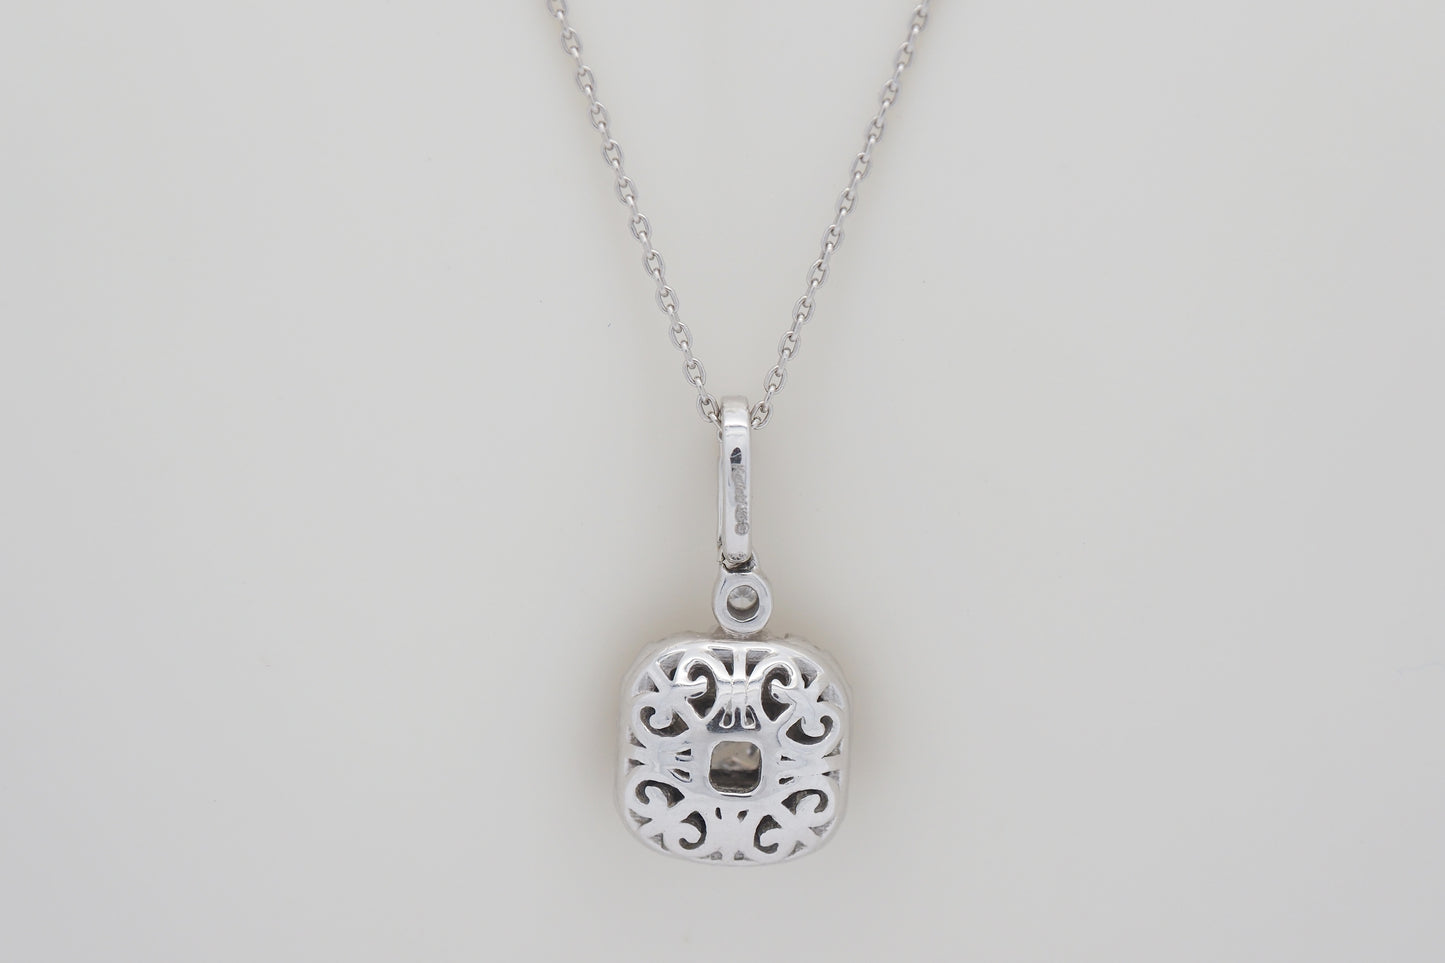 14k White Gold Ladies Diamond Necklace, 18 inches - 3.5g